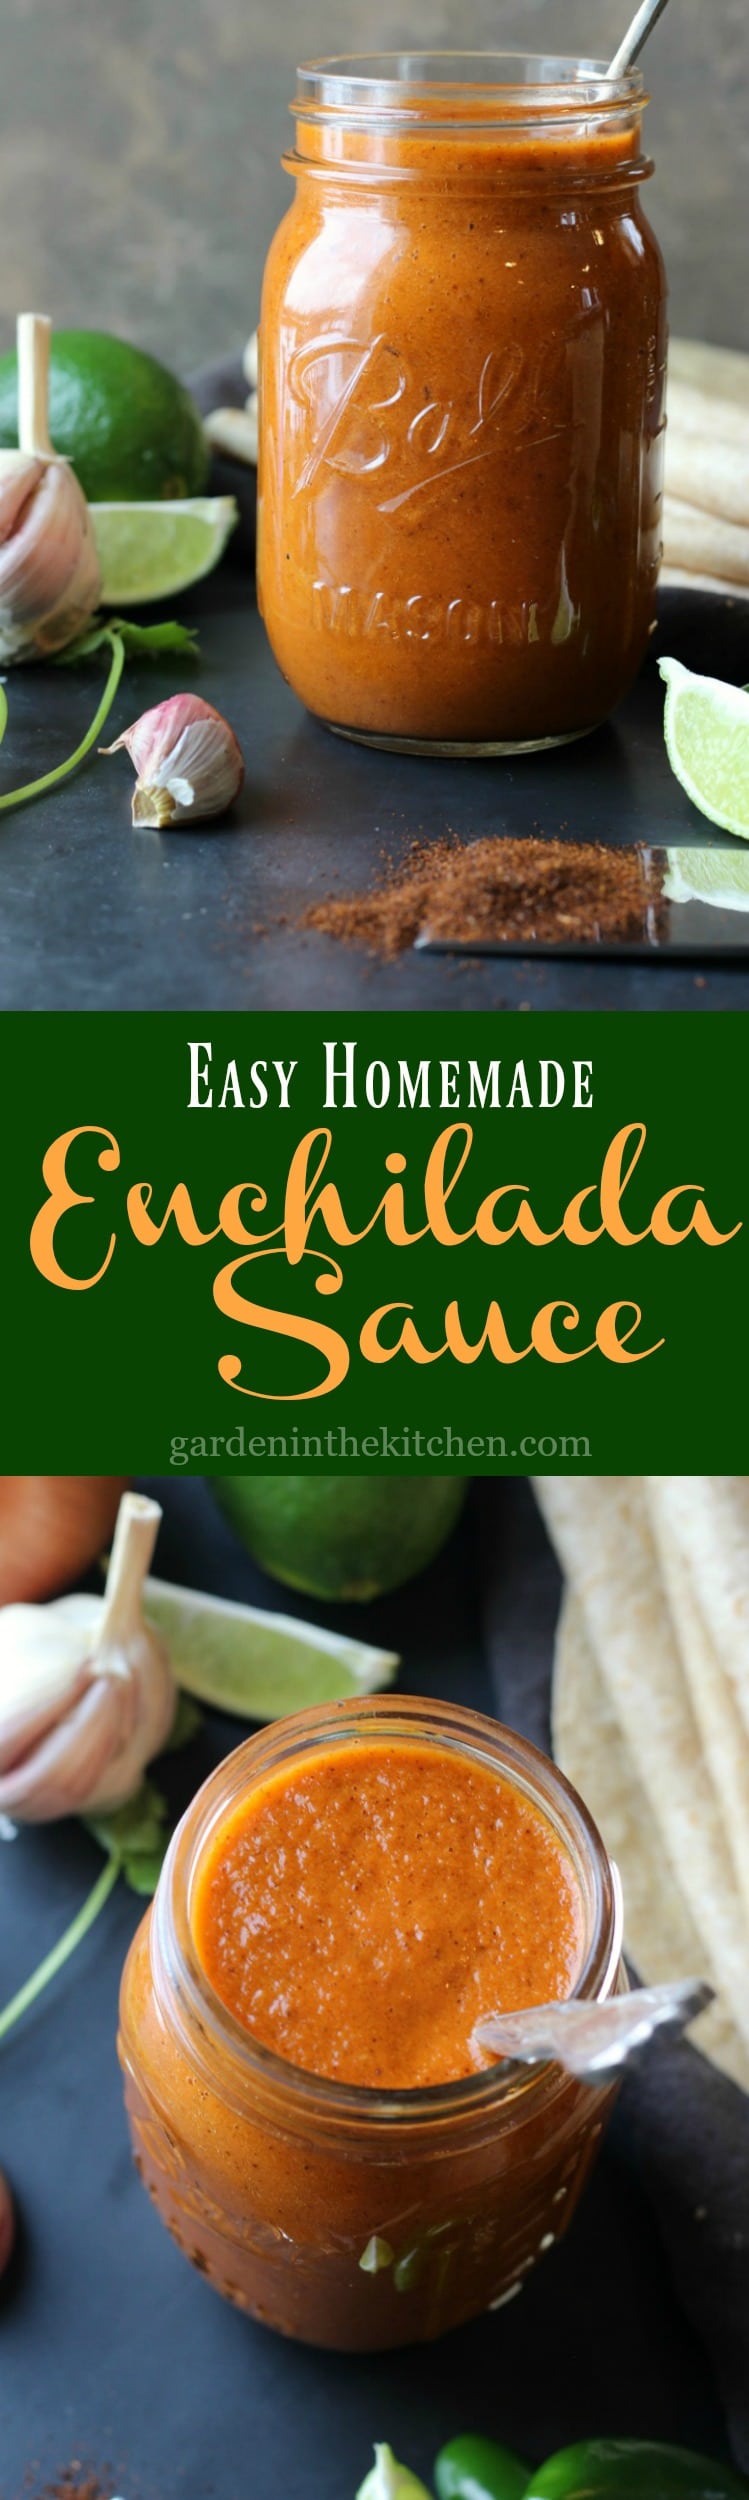 Easy Homemade Enchilada Sauce | gardeninthekitchen.com